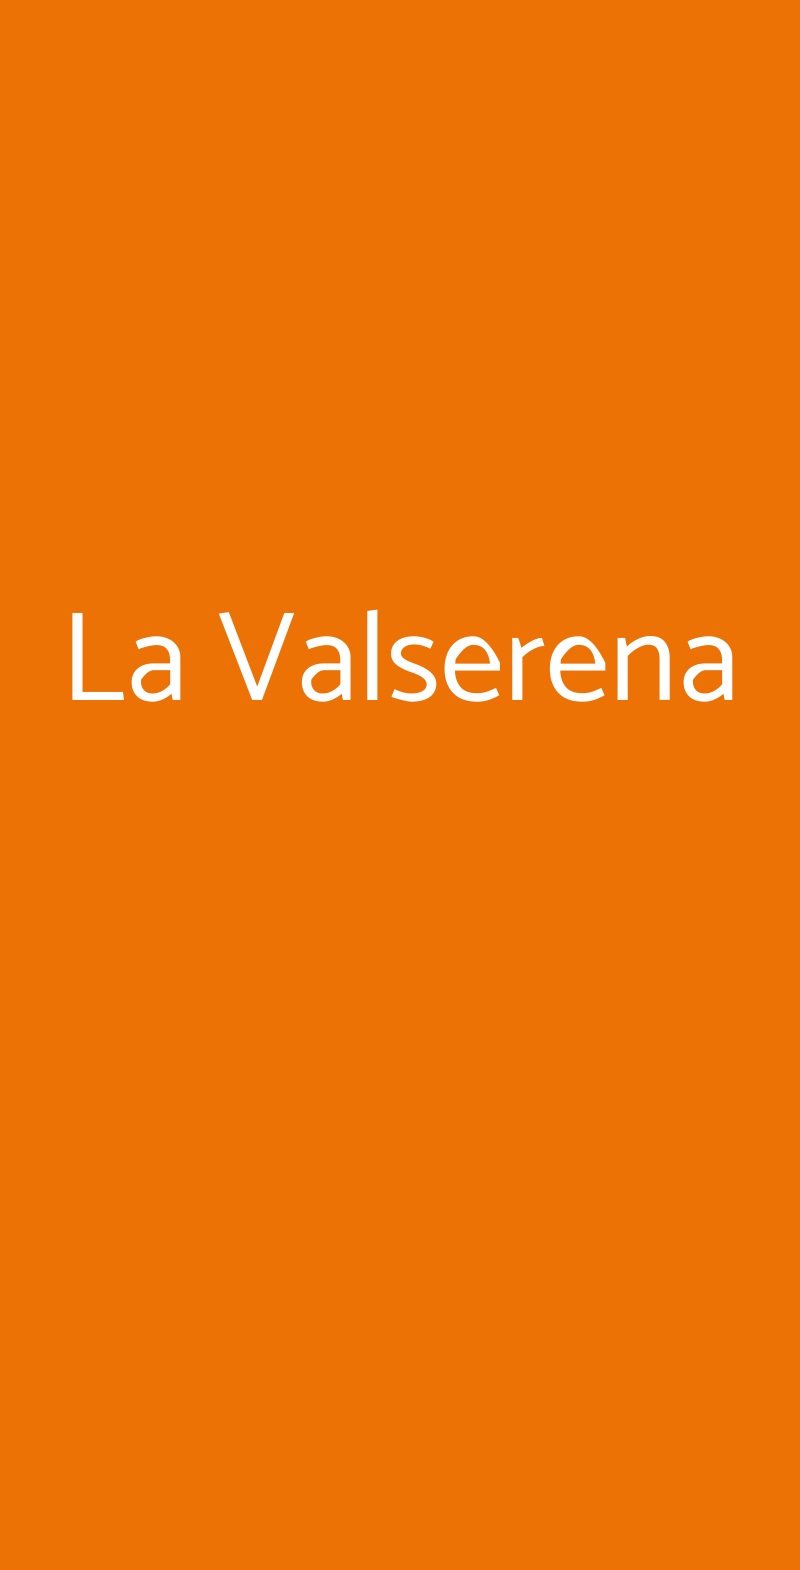 La Valserena Monteroni d'Arbia menù 1 pagina